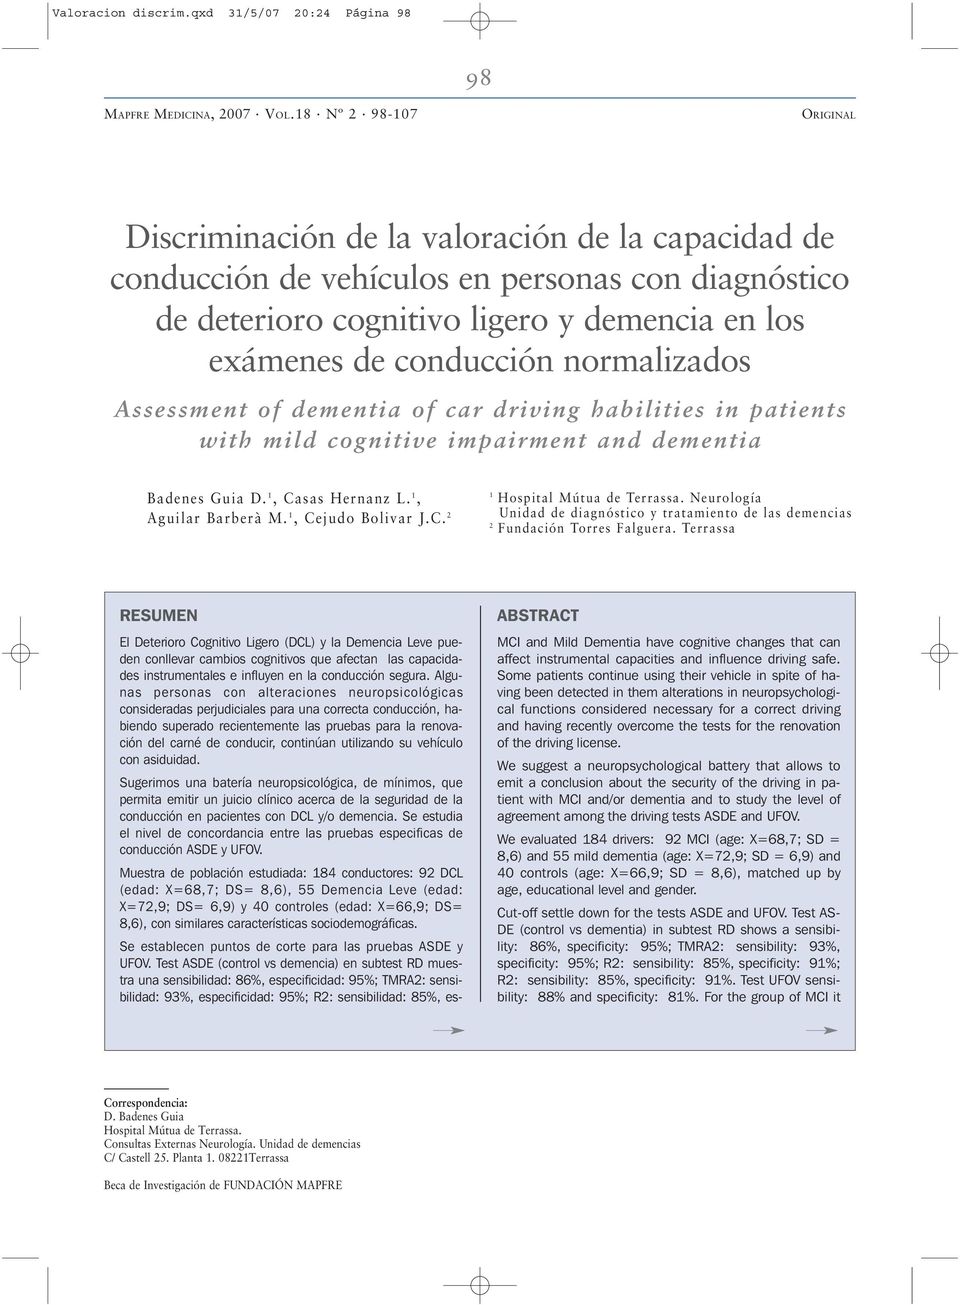 de conducción normalizados Assessment of dementia of car driving habilities in patients with mild cognitive impairment and dementia Badenes Guia D. 1, Casas Hernanz L. 1, Aguilar Barberà M.